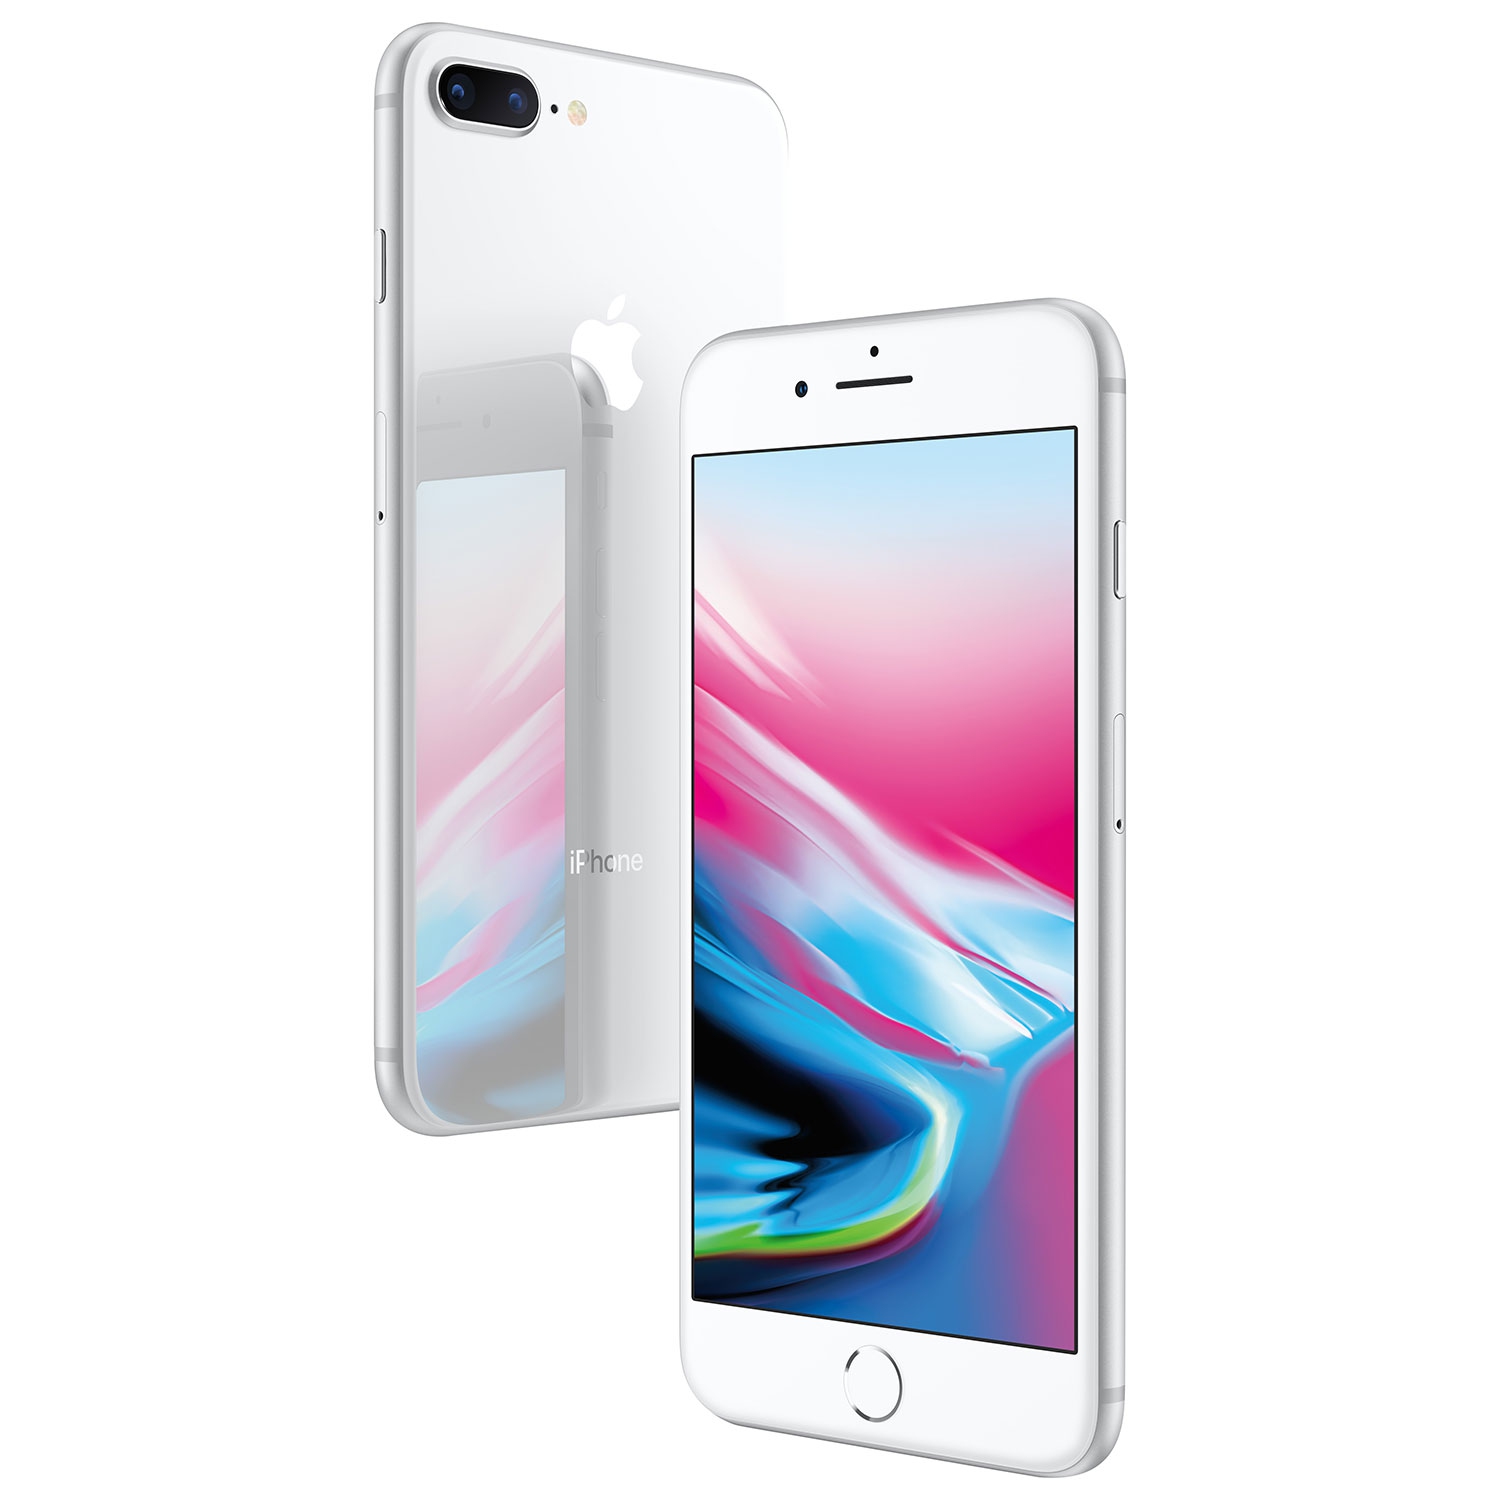 Refurbished (Excellent) - Apple iPhone 8 Plus 64GB Smartphone - Silver - Unlocked - Certified Refurbished